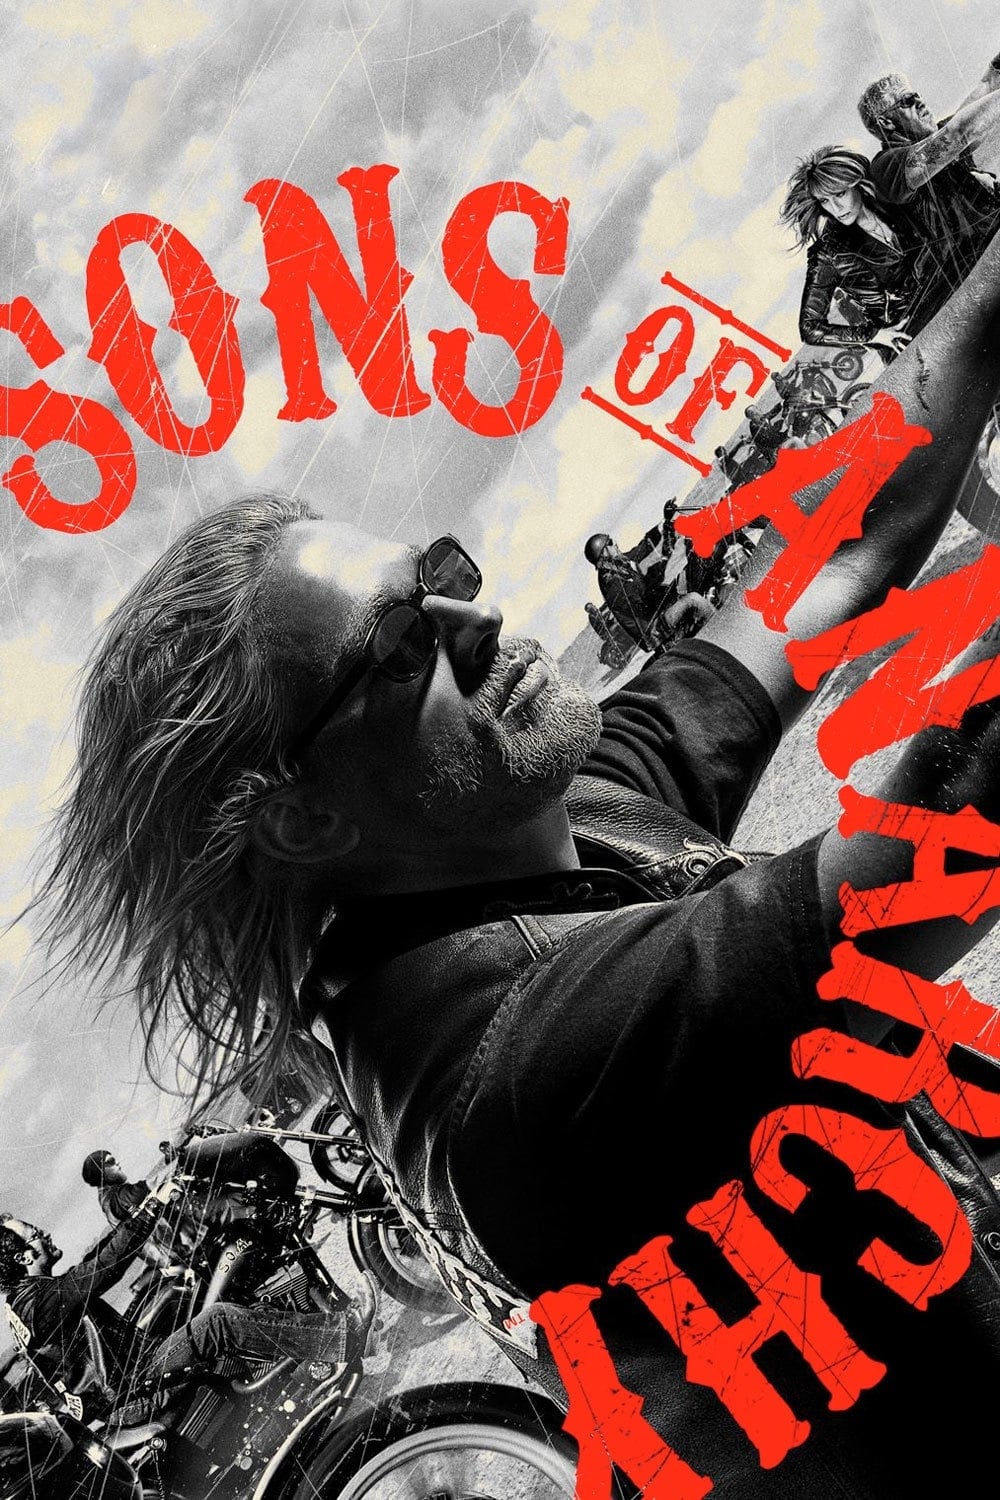 Sons of Anarchy (2008 - 2014) Seizoen 4 Disc 1 BD50